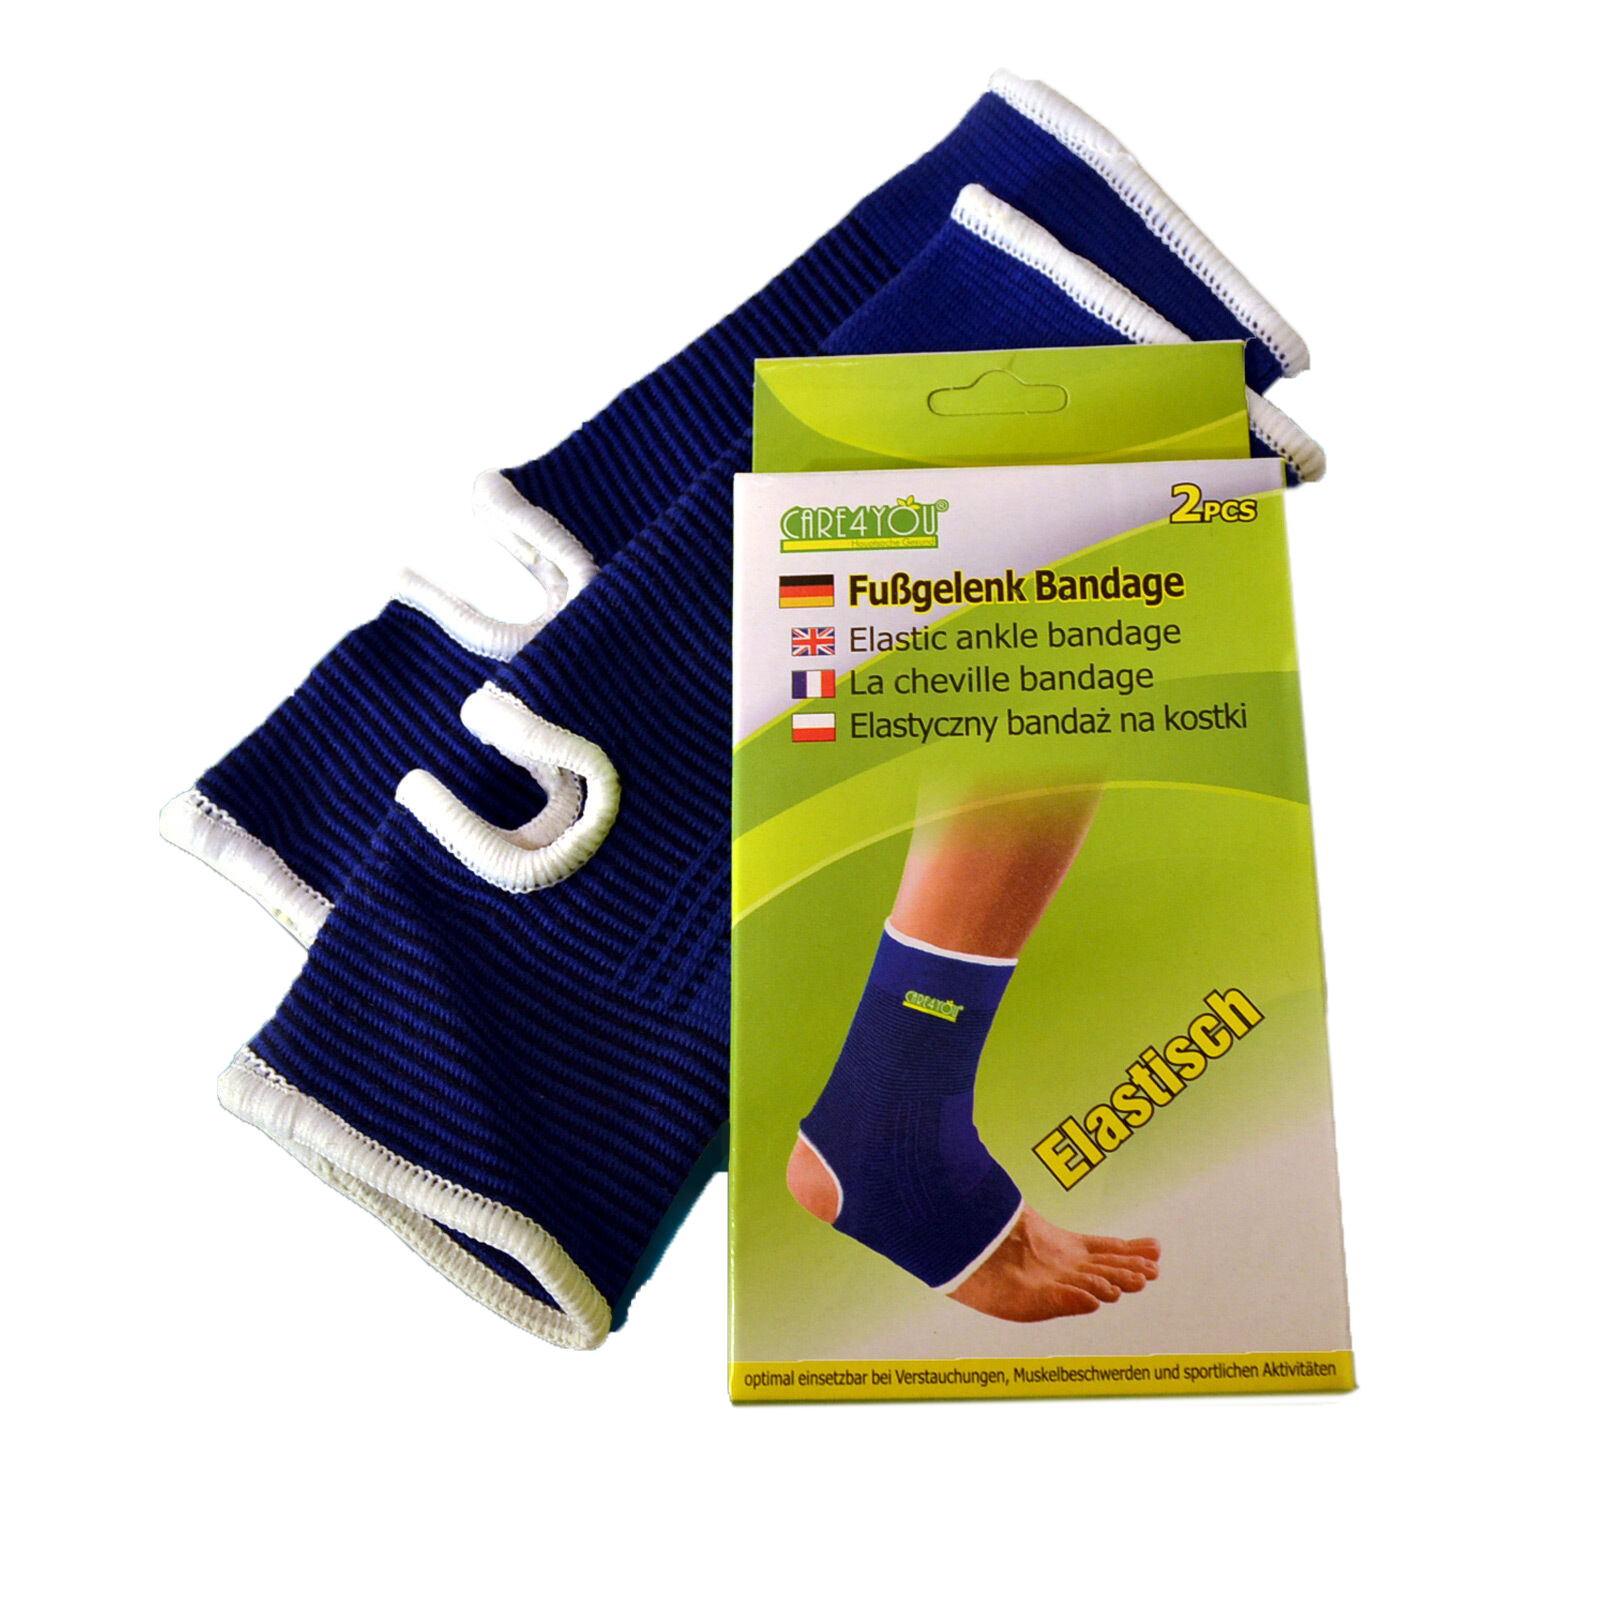 Bandage Bandage 2x vendify Sport Fußgelenk - Sprunggelenk